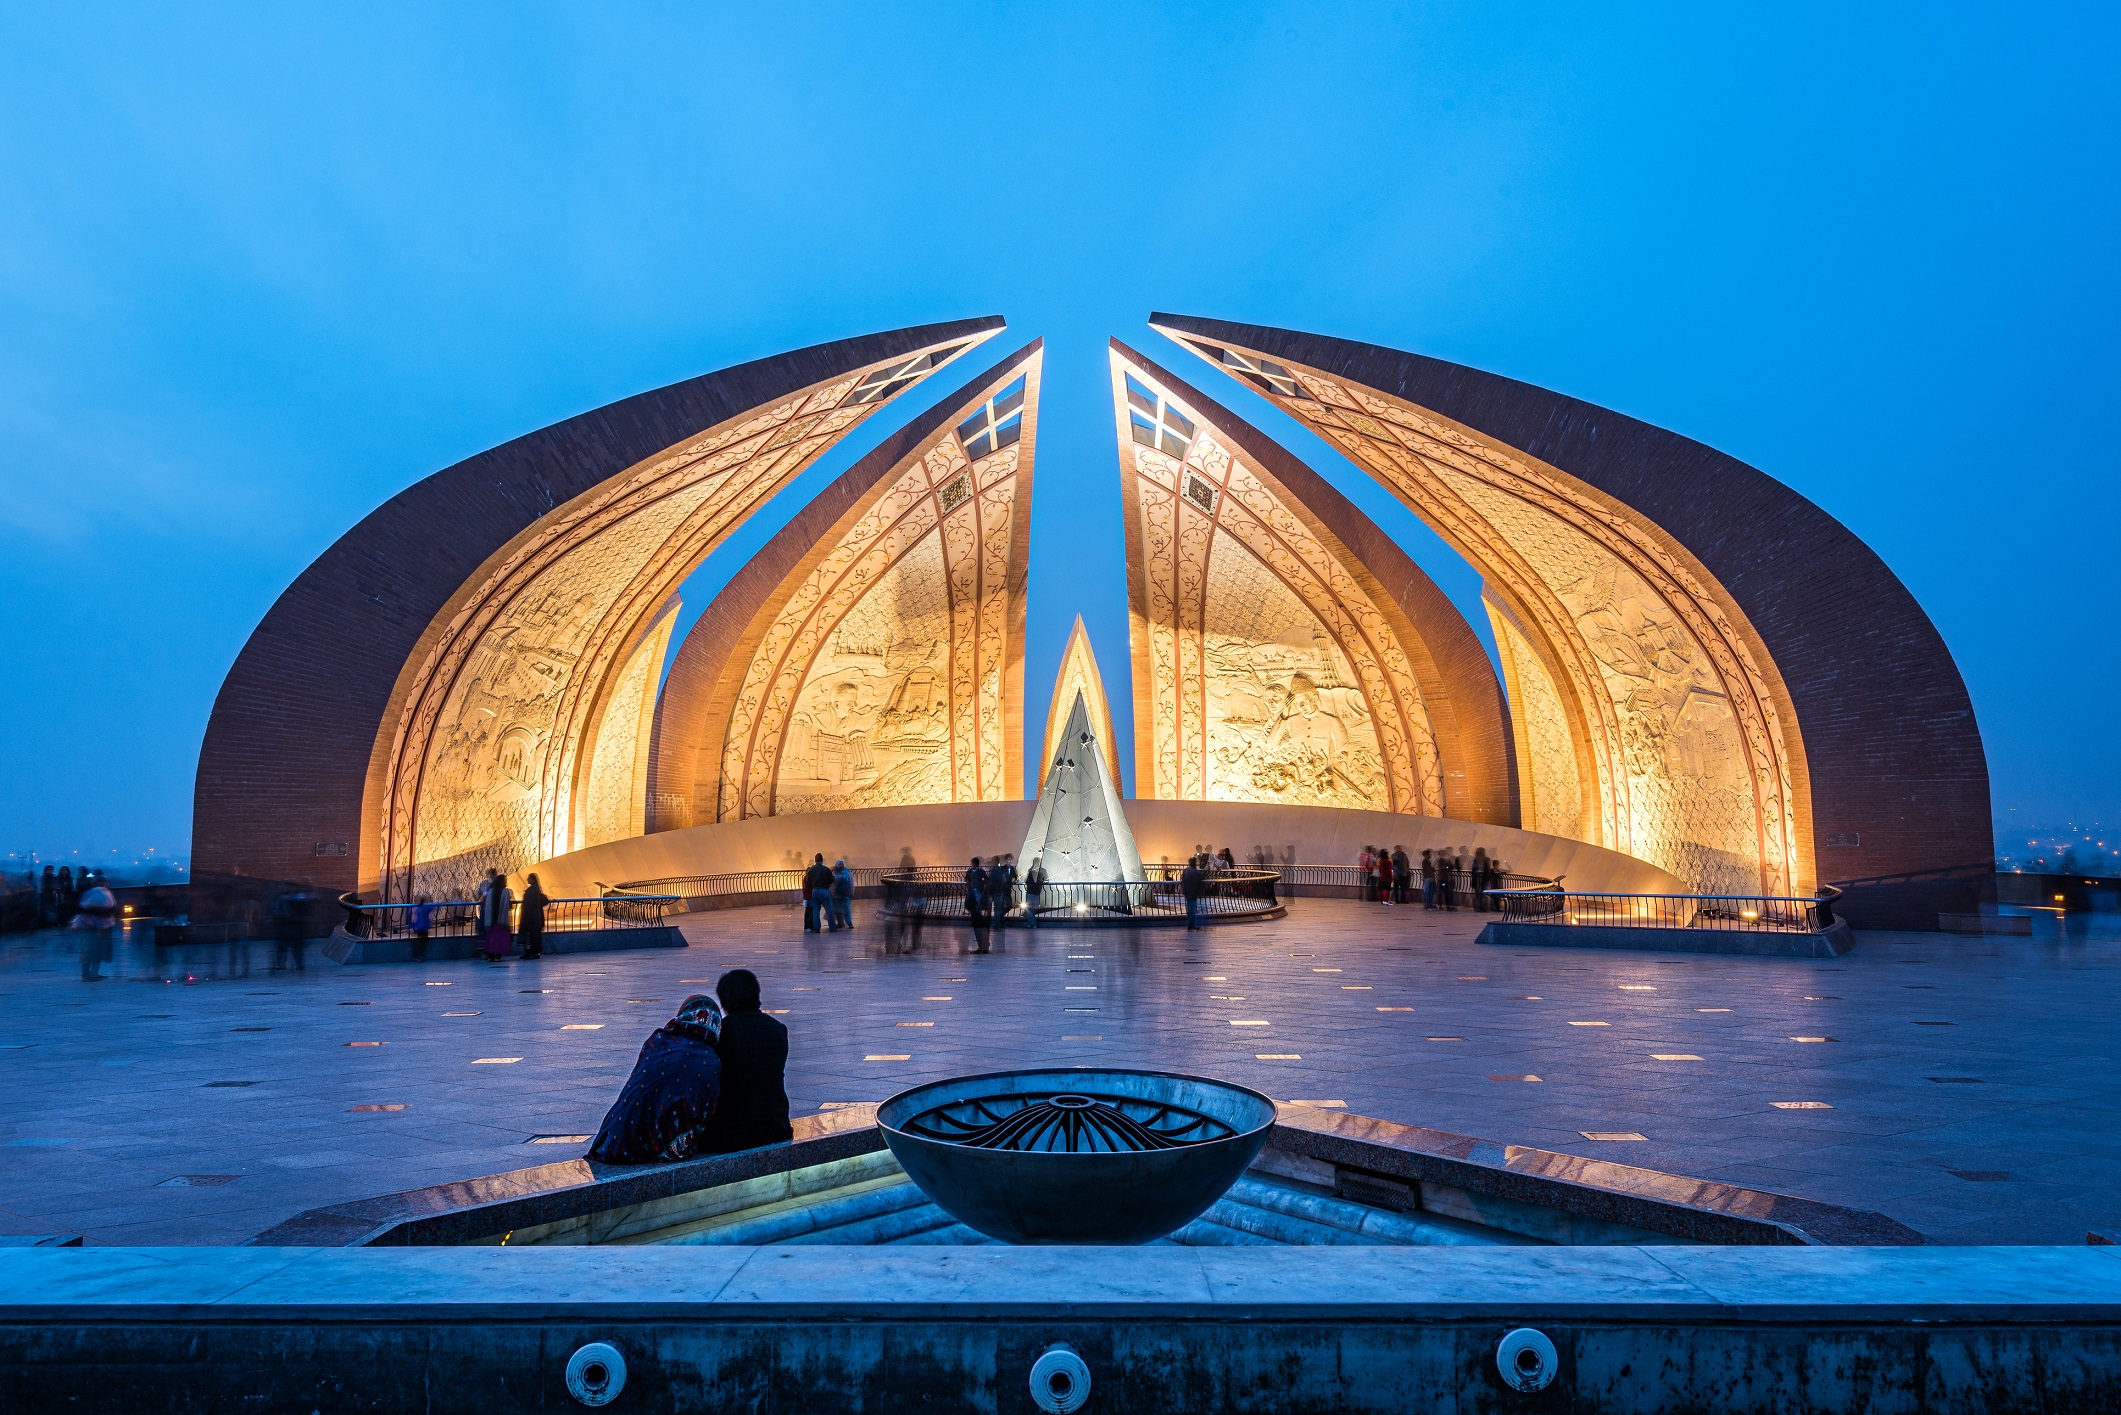 Pakistan monument at night